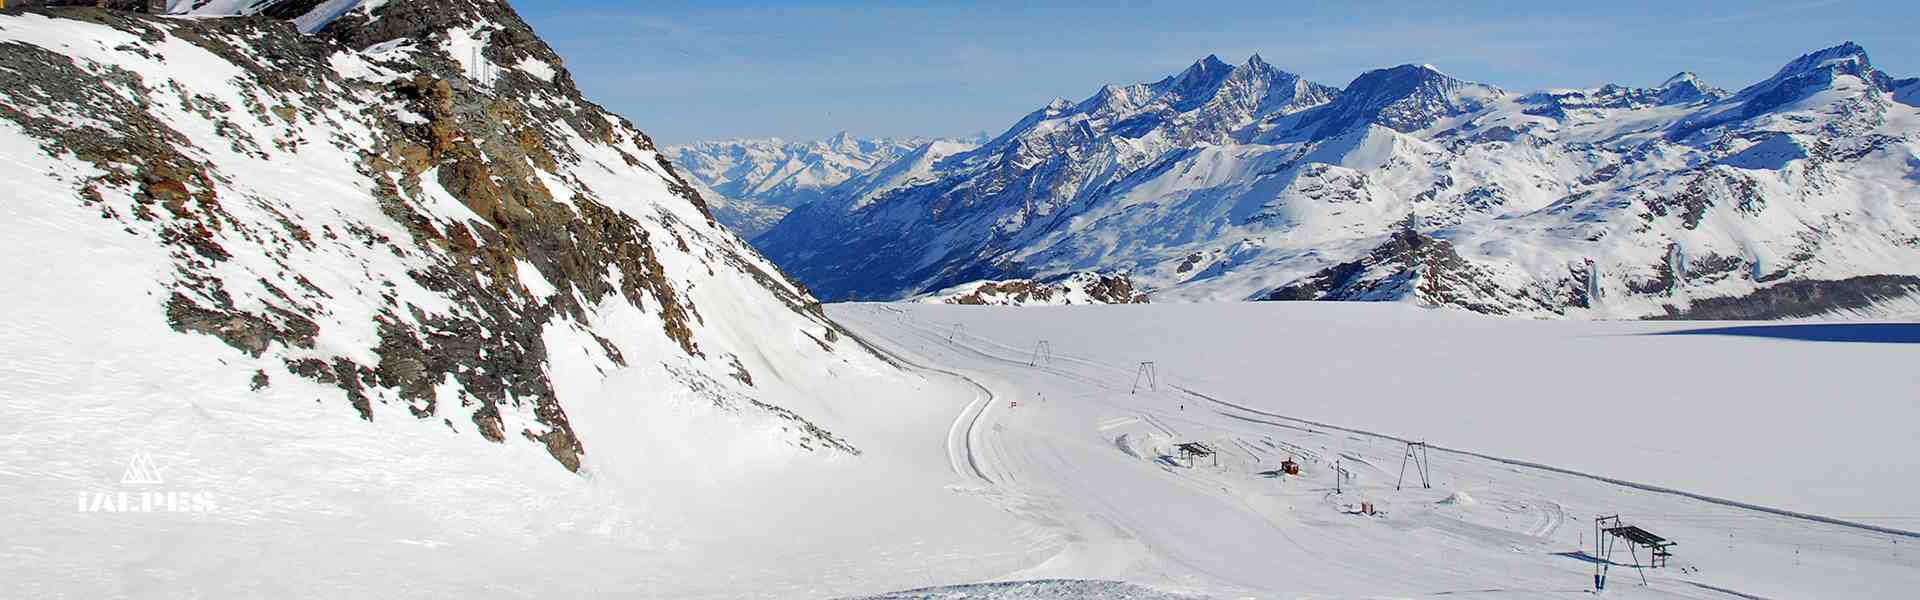 Station Zermatt Matterhorn Ski Paradise